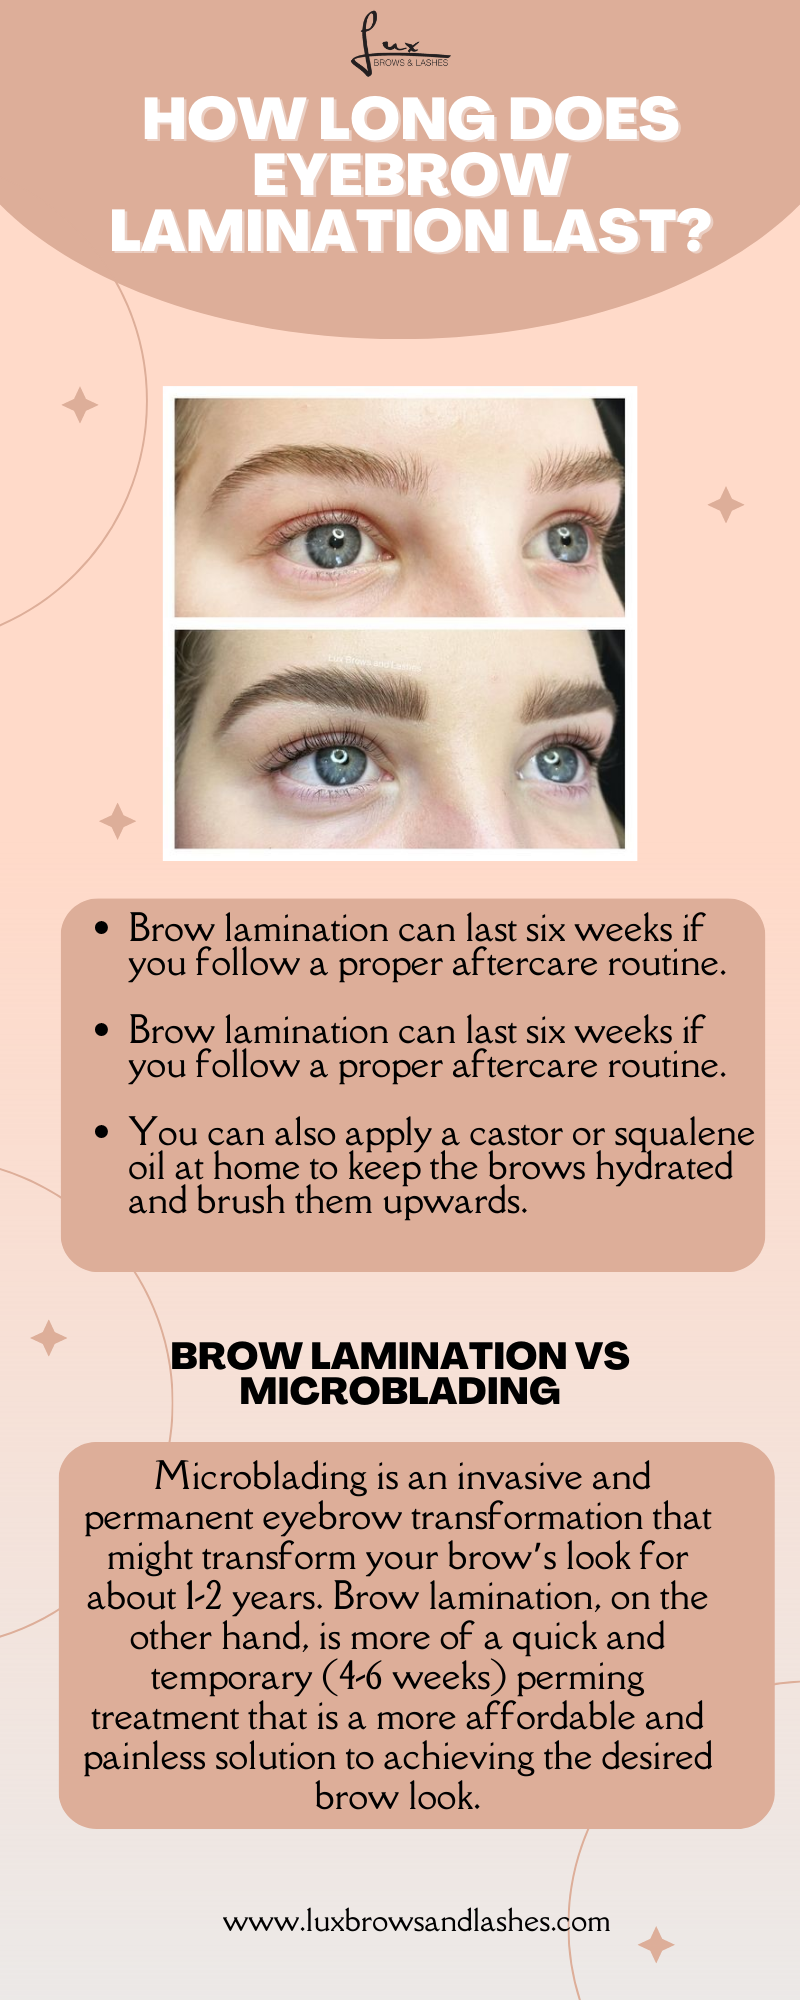 Brow Lamination eyebrows brows beauty brow lamination last eyebrow lamination laminated brows